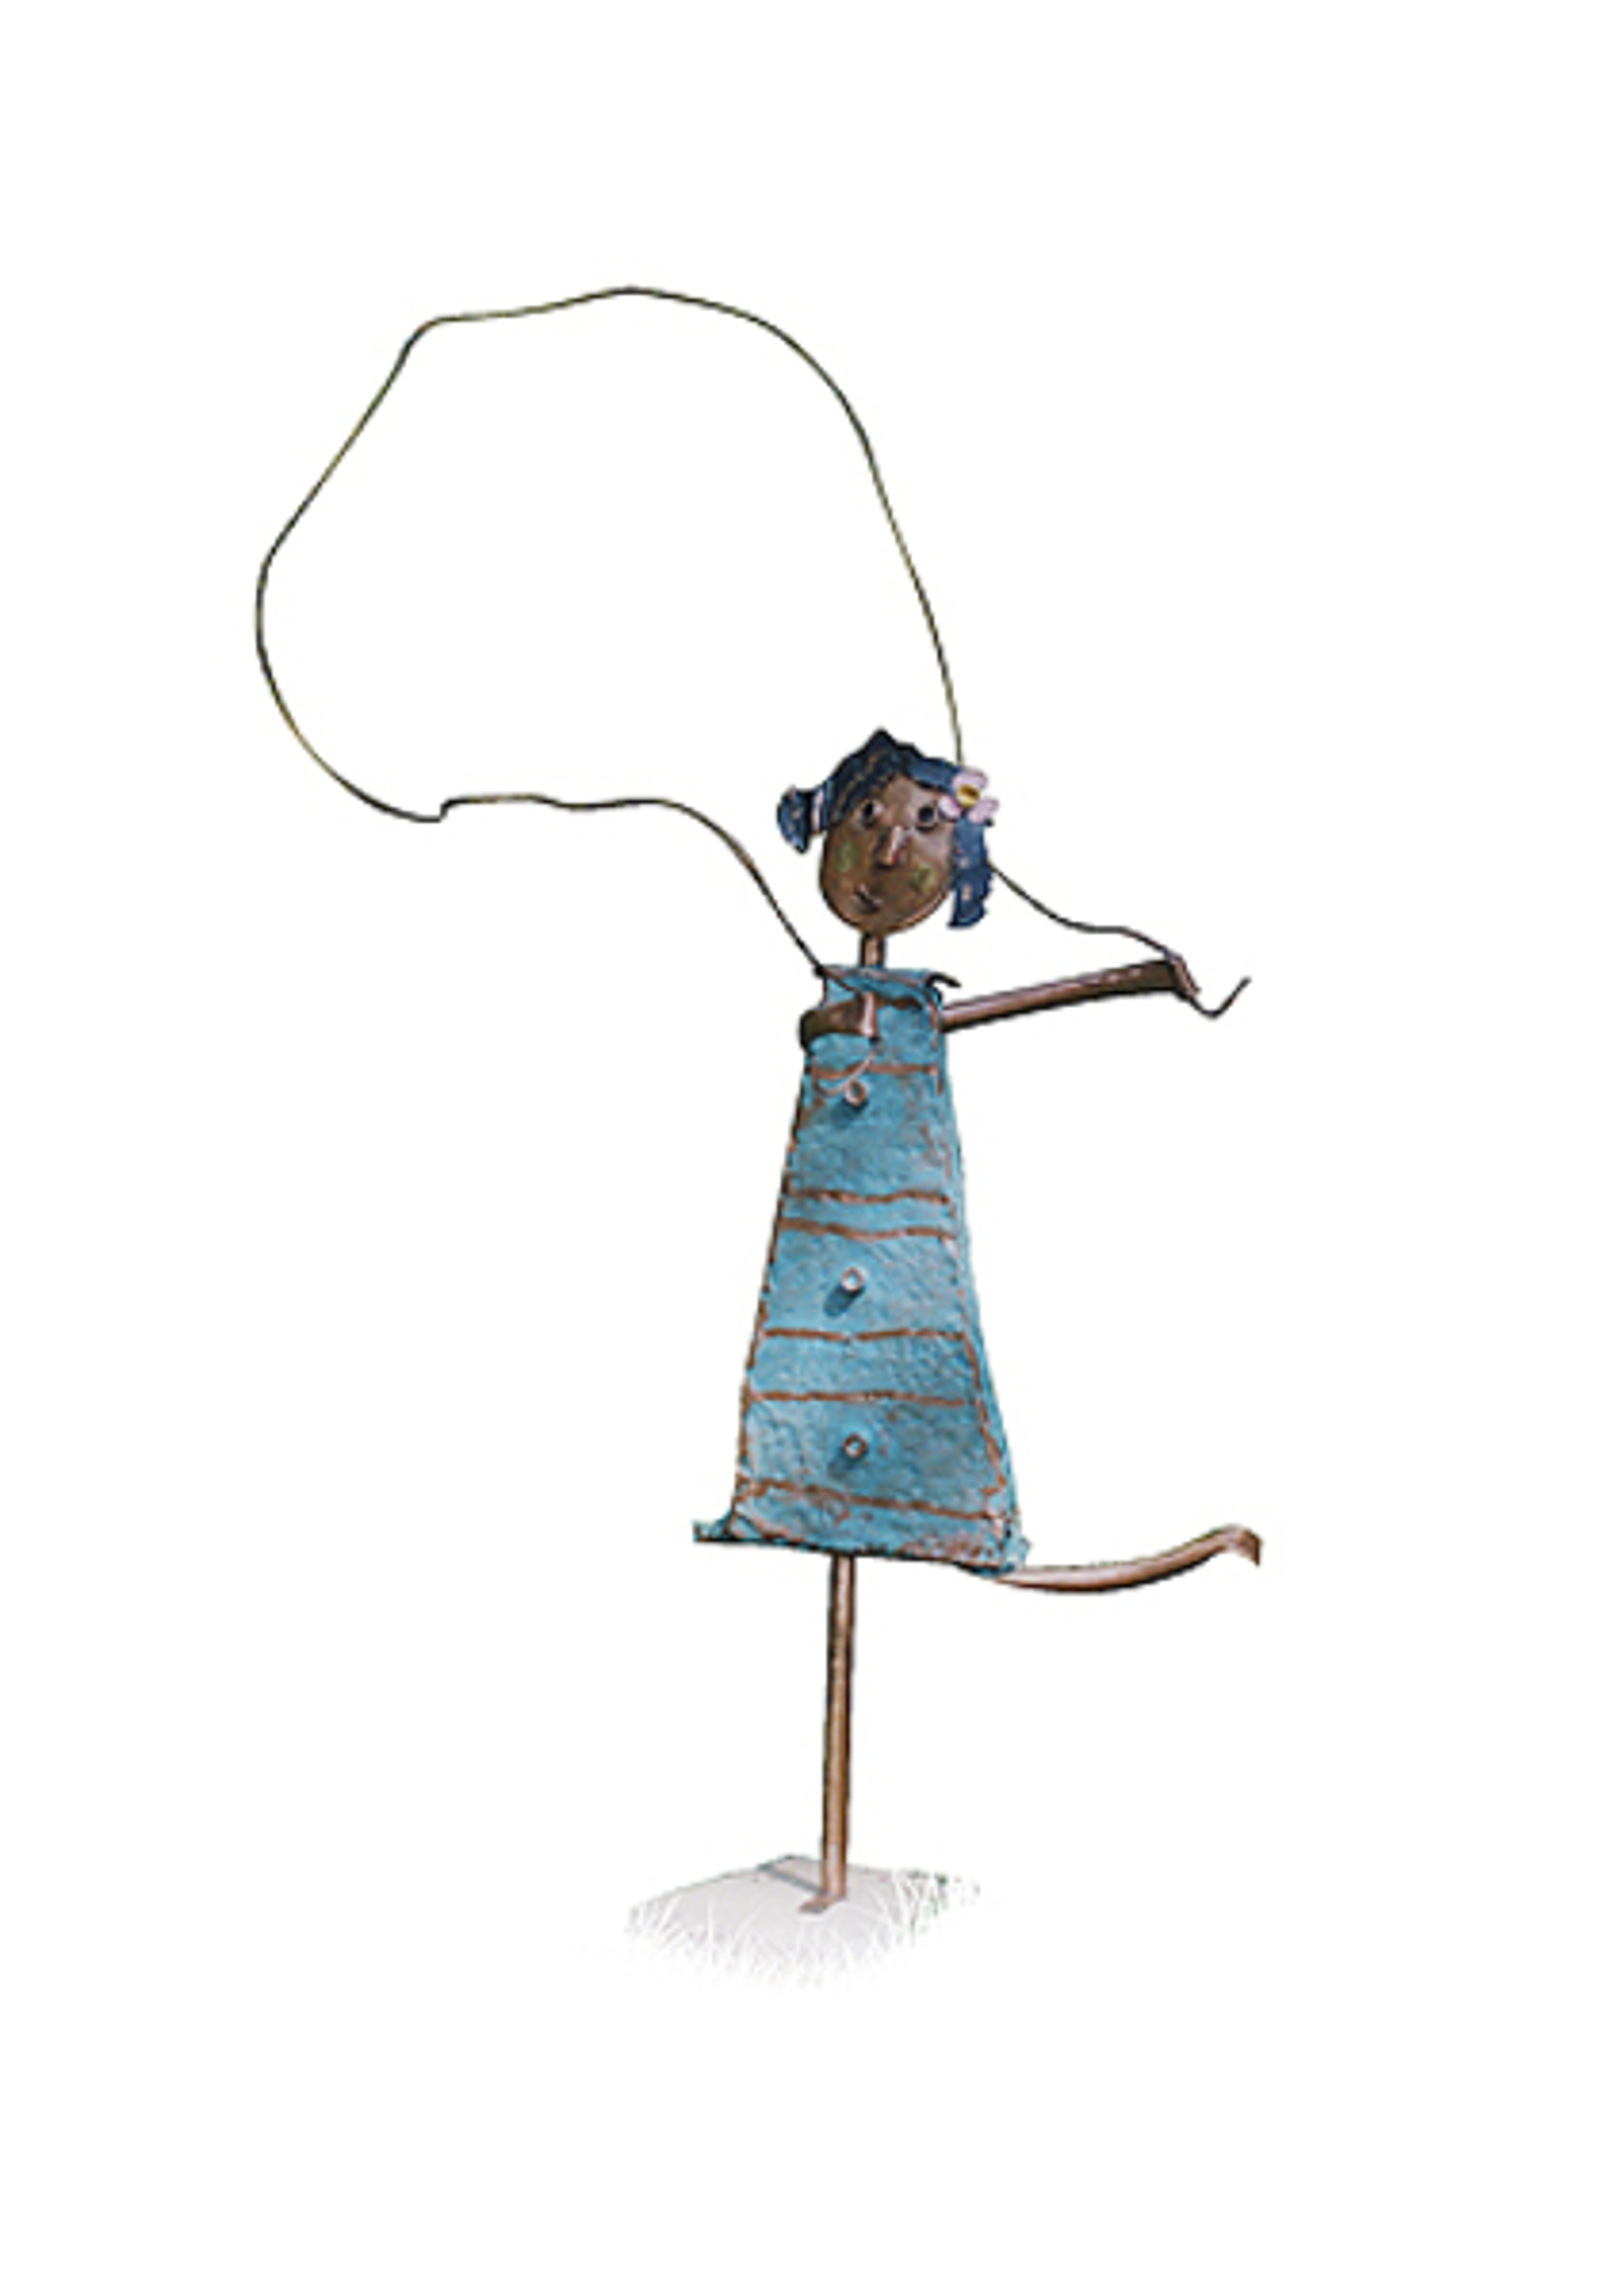 Girl Jumping Rope by Peter Otfinoski